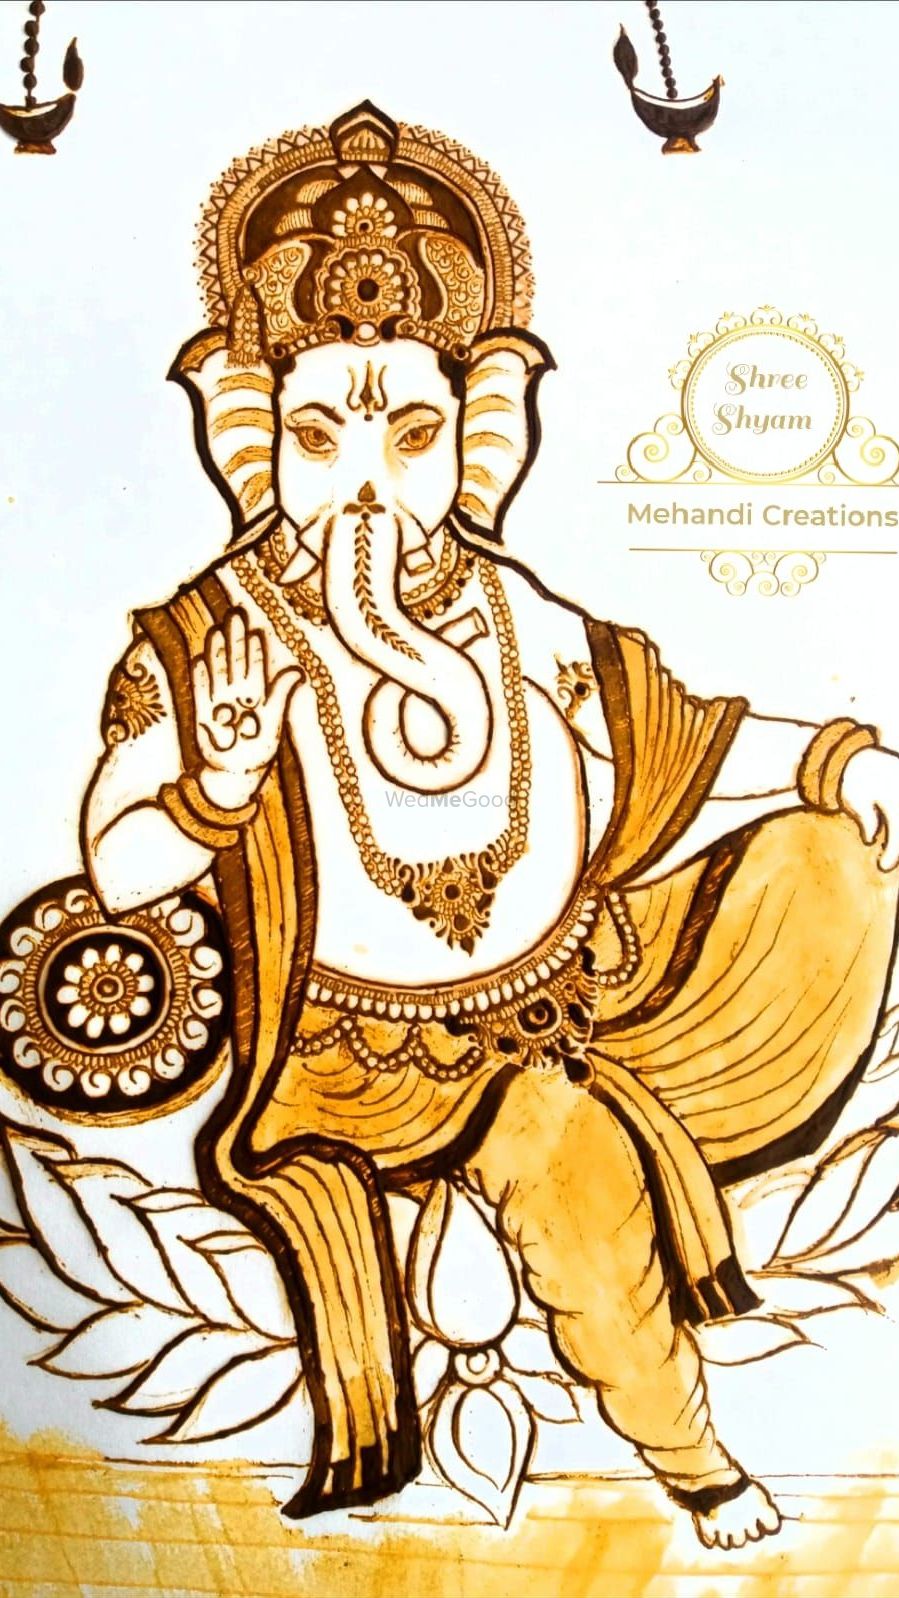 Shree Shyam Mehandi Creations